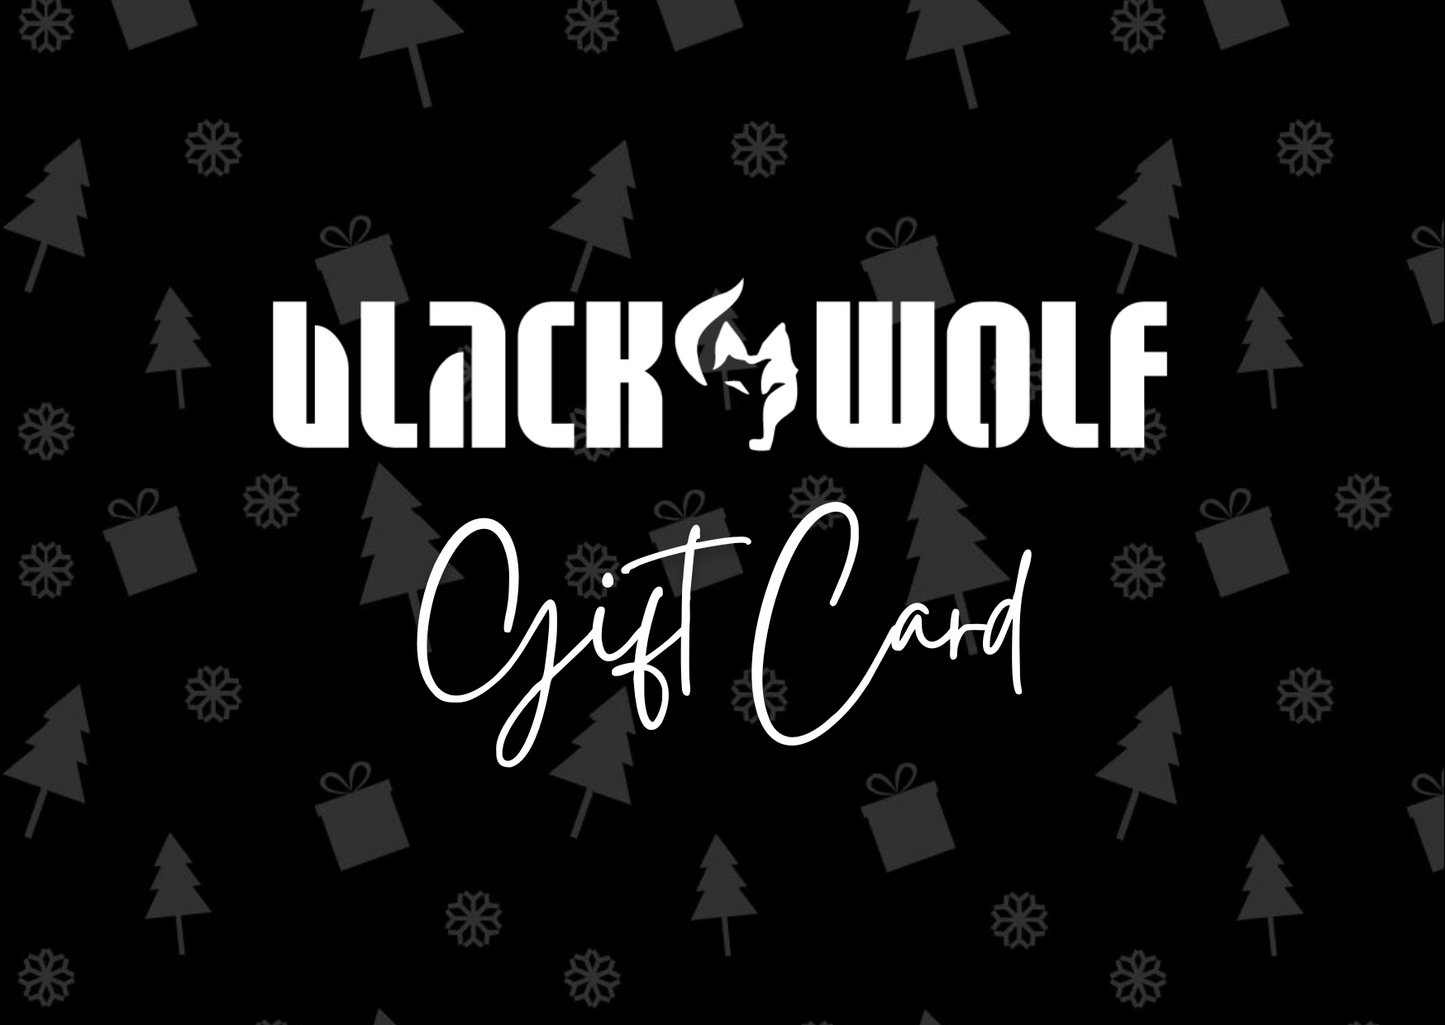 
                  
                    BlackWolf Gift Card
                  
                